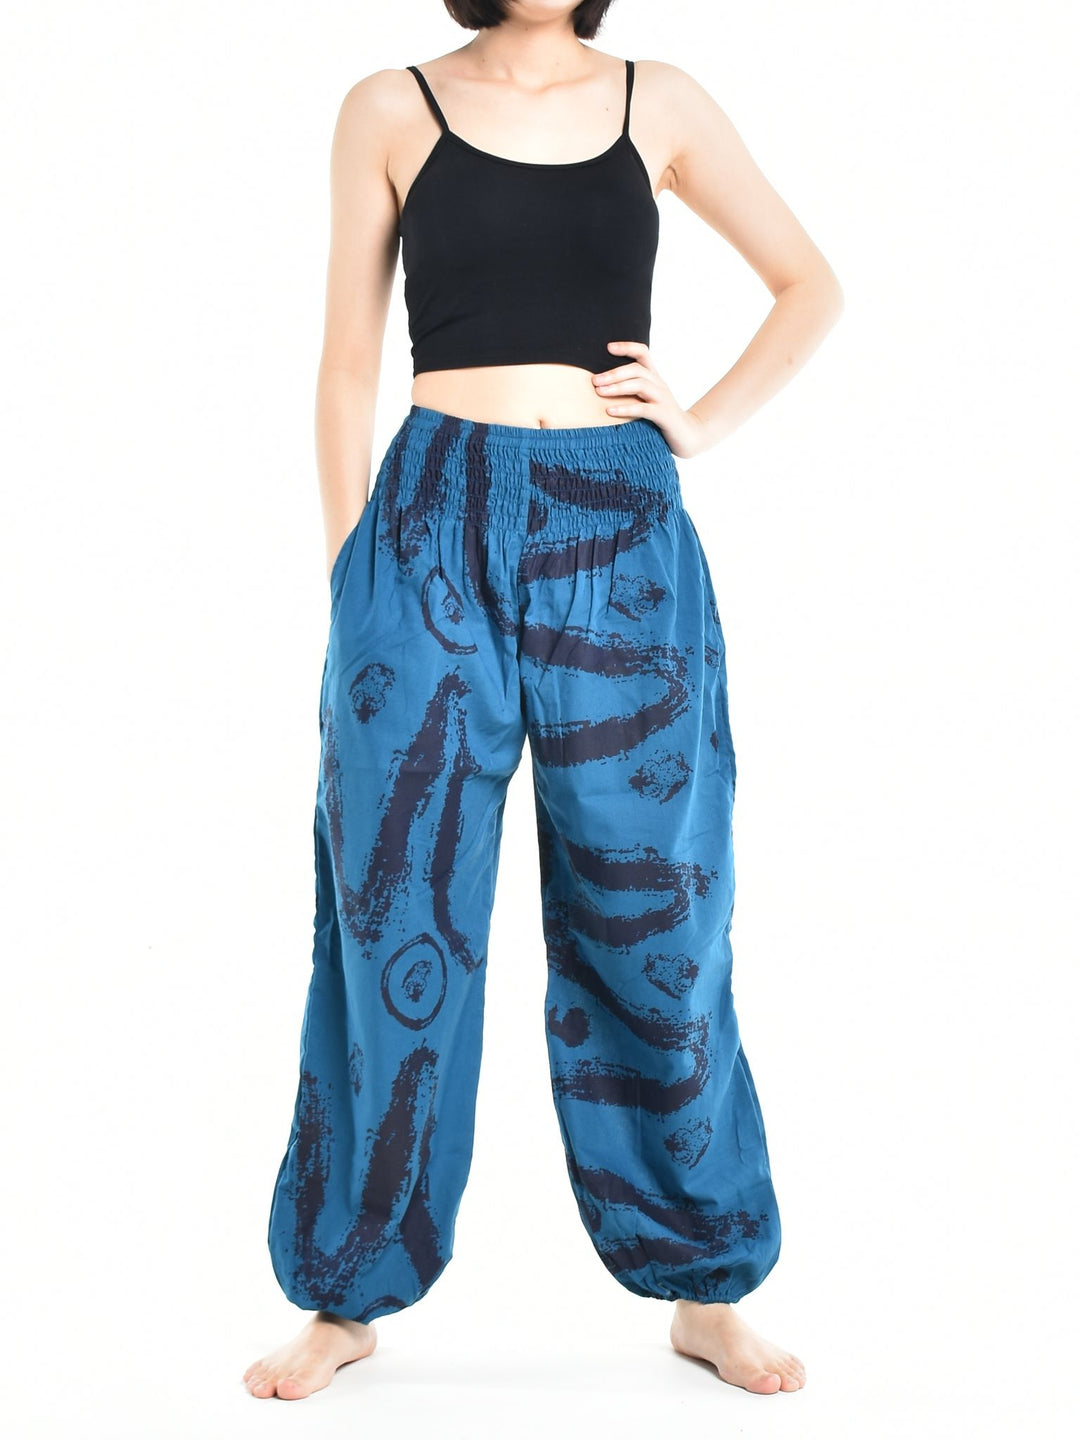 Bohotusk Womens Autumn Blue Swirl Cotton Harem Pants S/M to 3XL